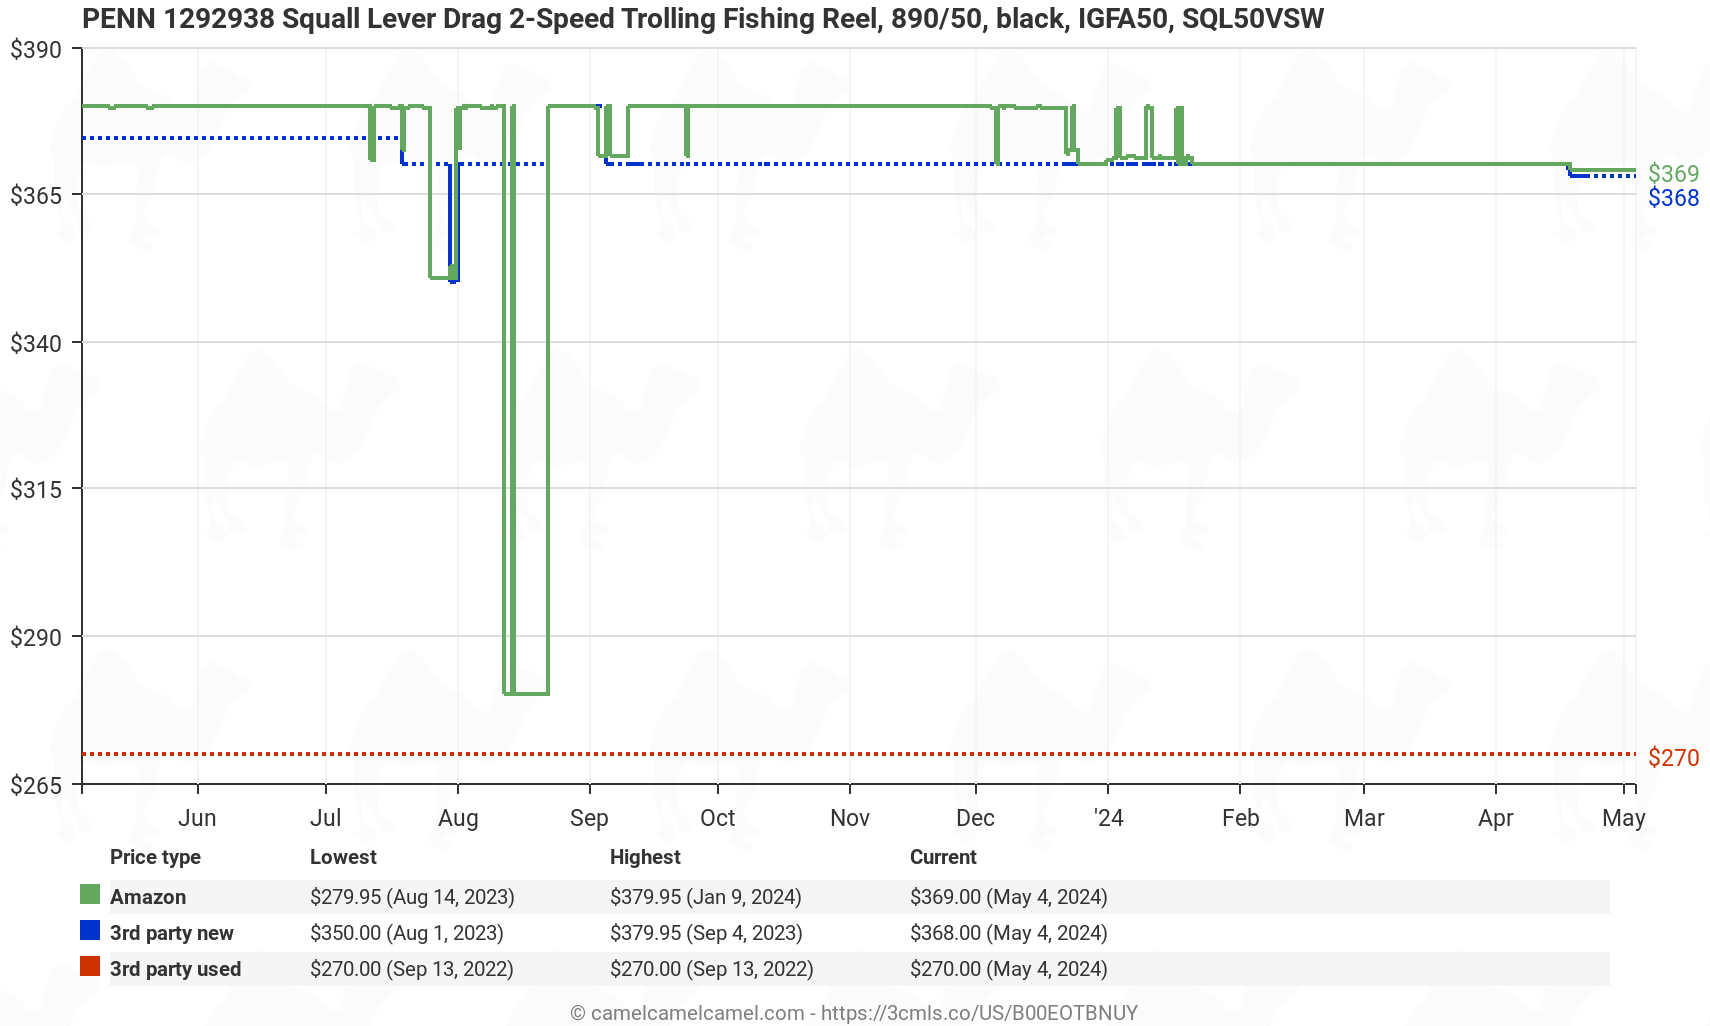 Penn Squall Lever Drag 2-Speed Trolling Fishing Reel - Price History: B00EOTBNUY